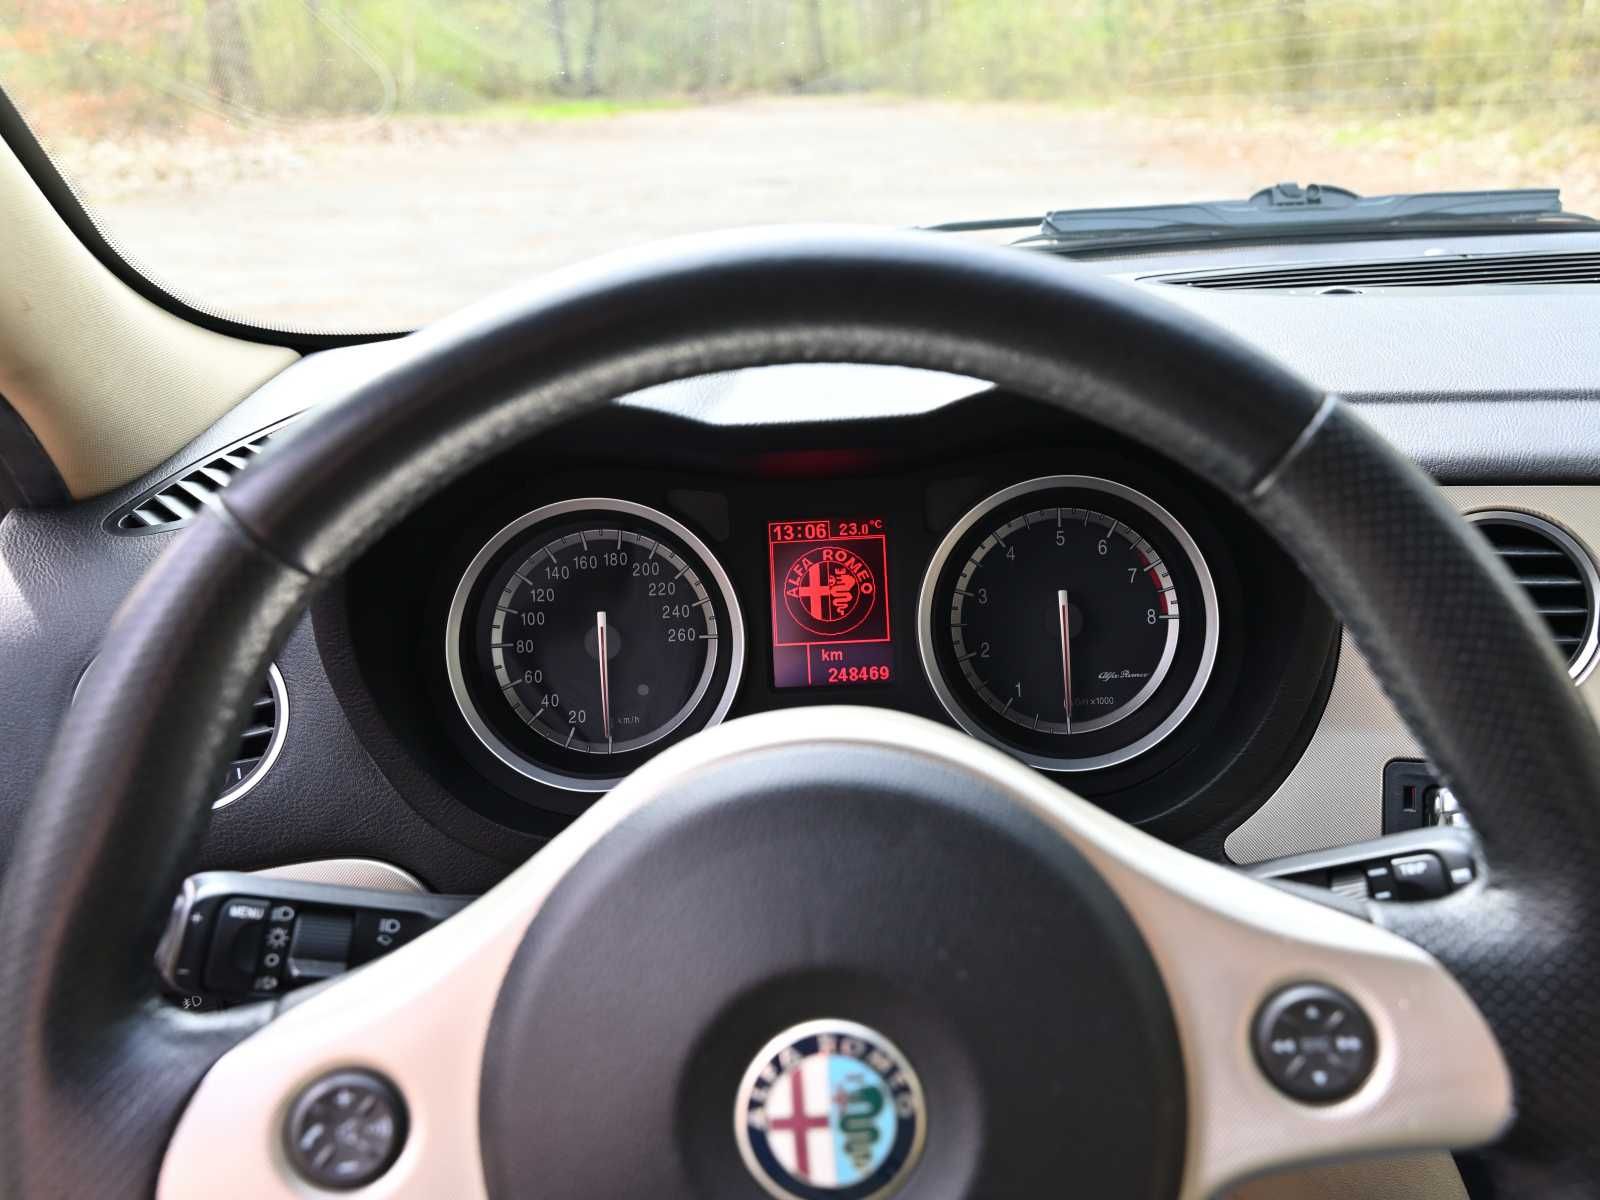 Alfa Romeo 159, benz. 1.8 MPI(140 km) + lpg